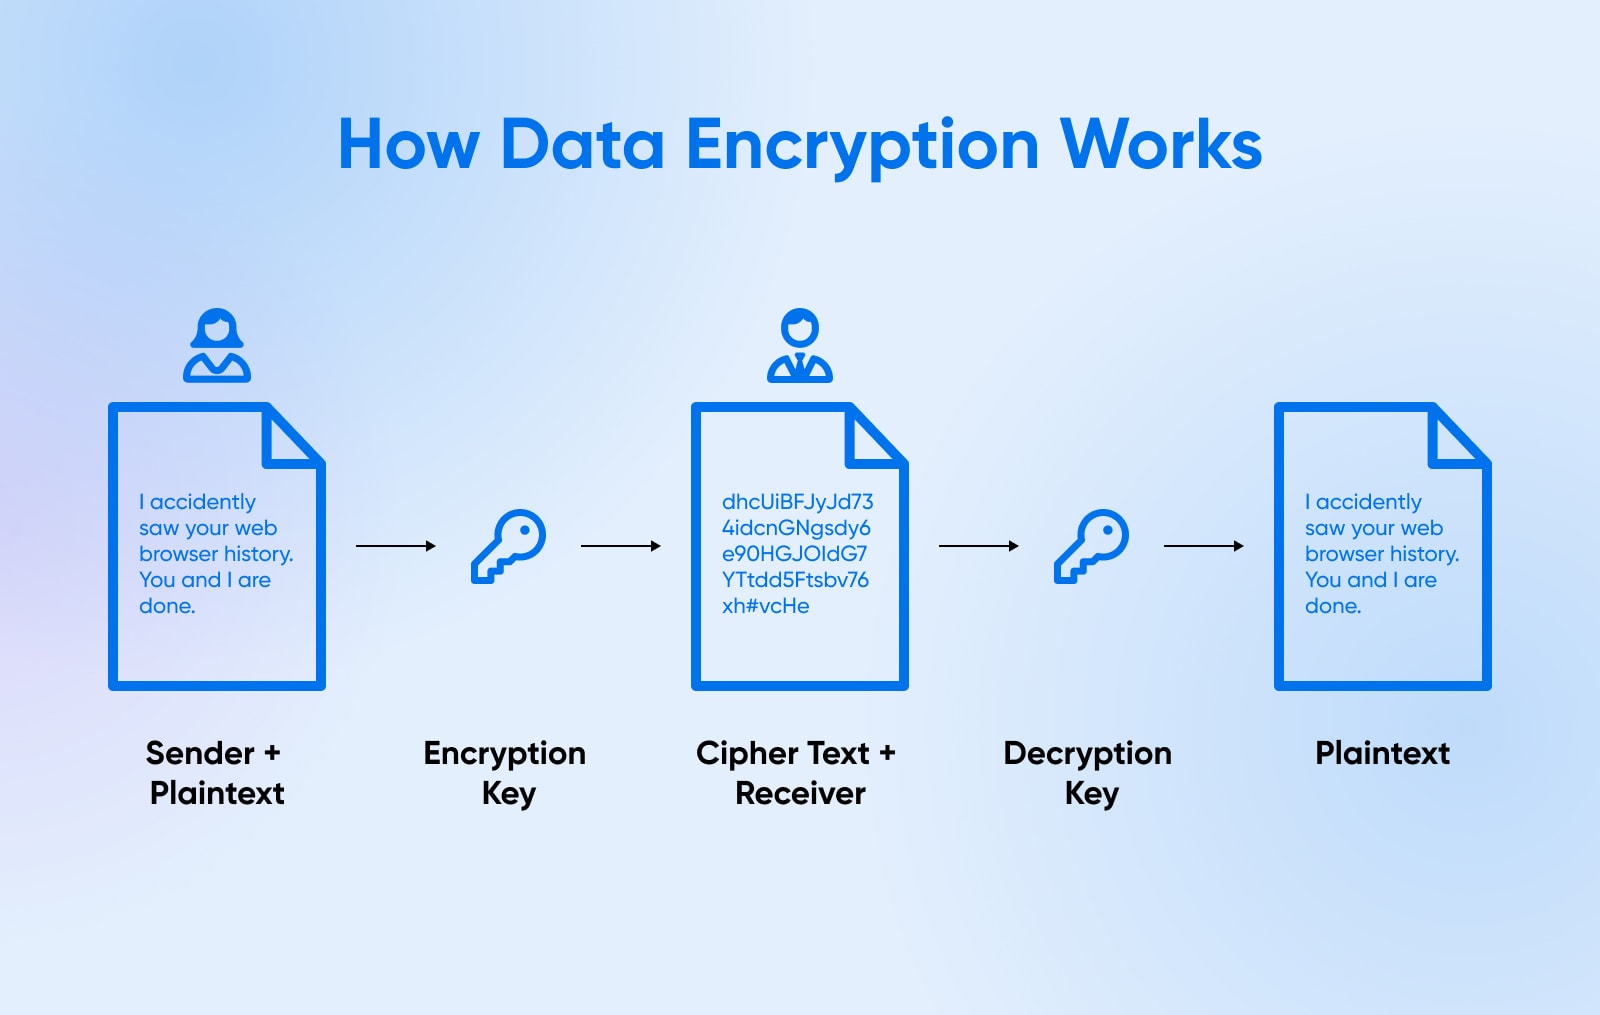 how data encryption words: sender + plaintext to encryption key to cipher text + receiver to decryption key back into plaintext